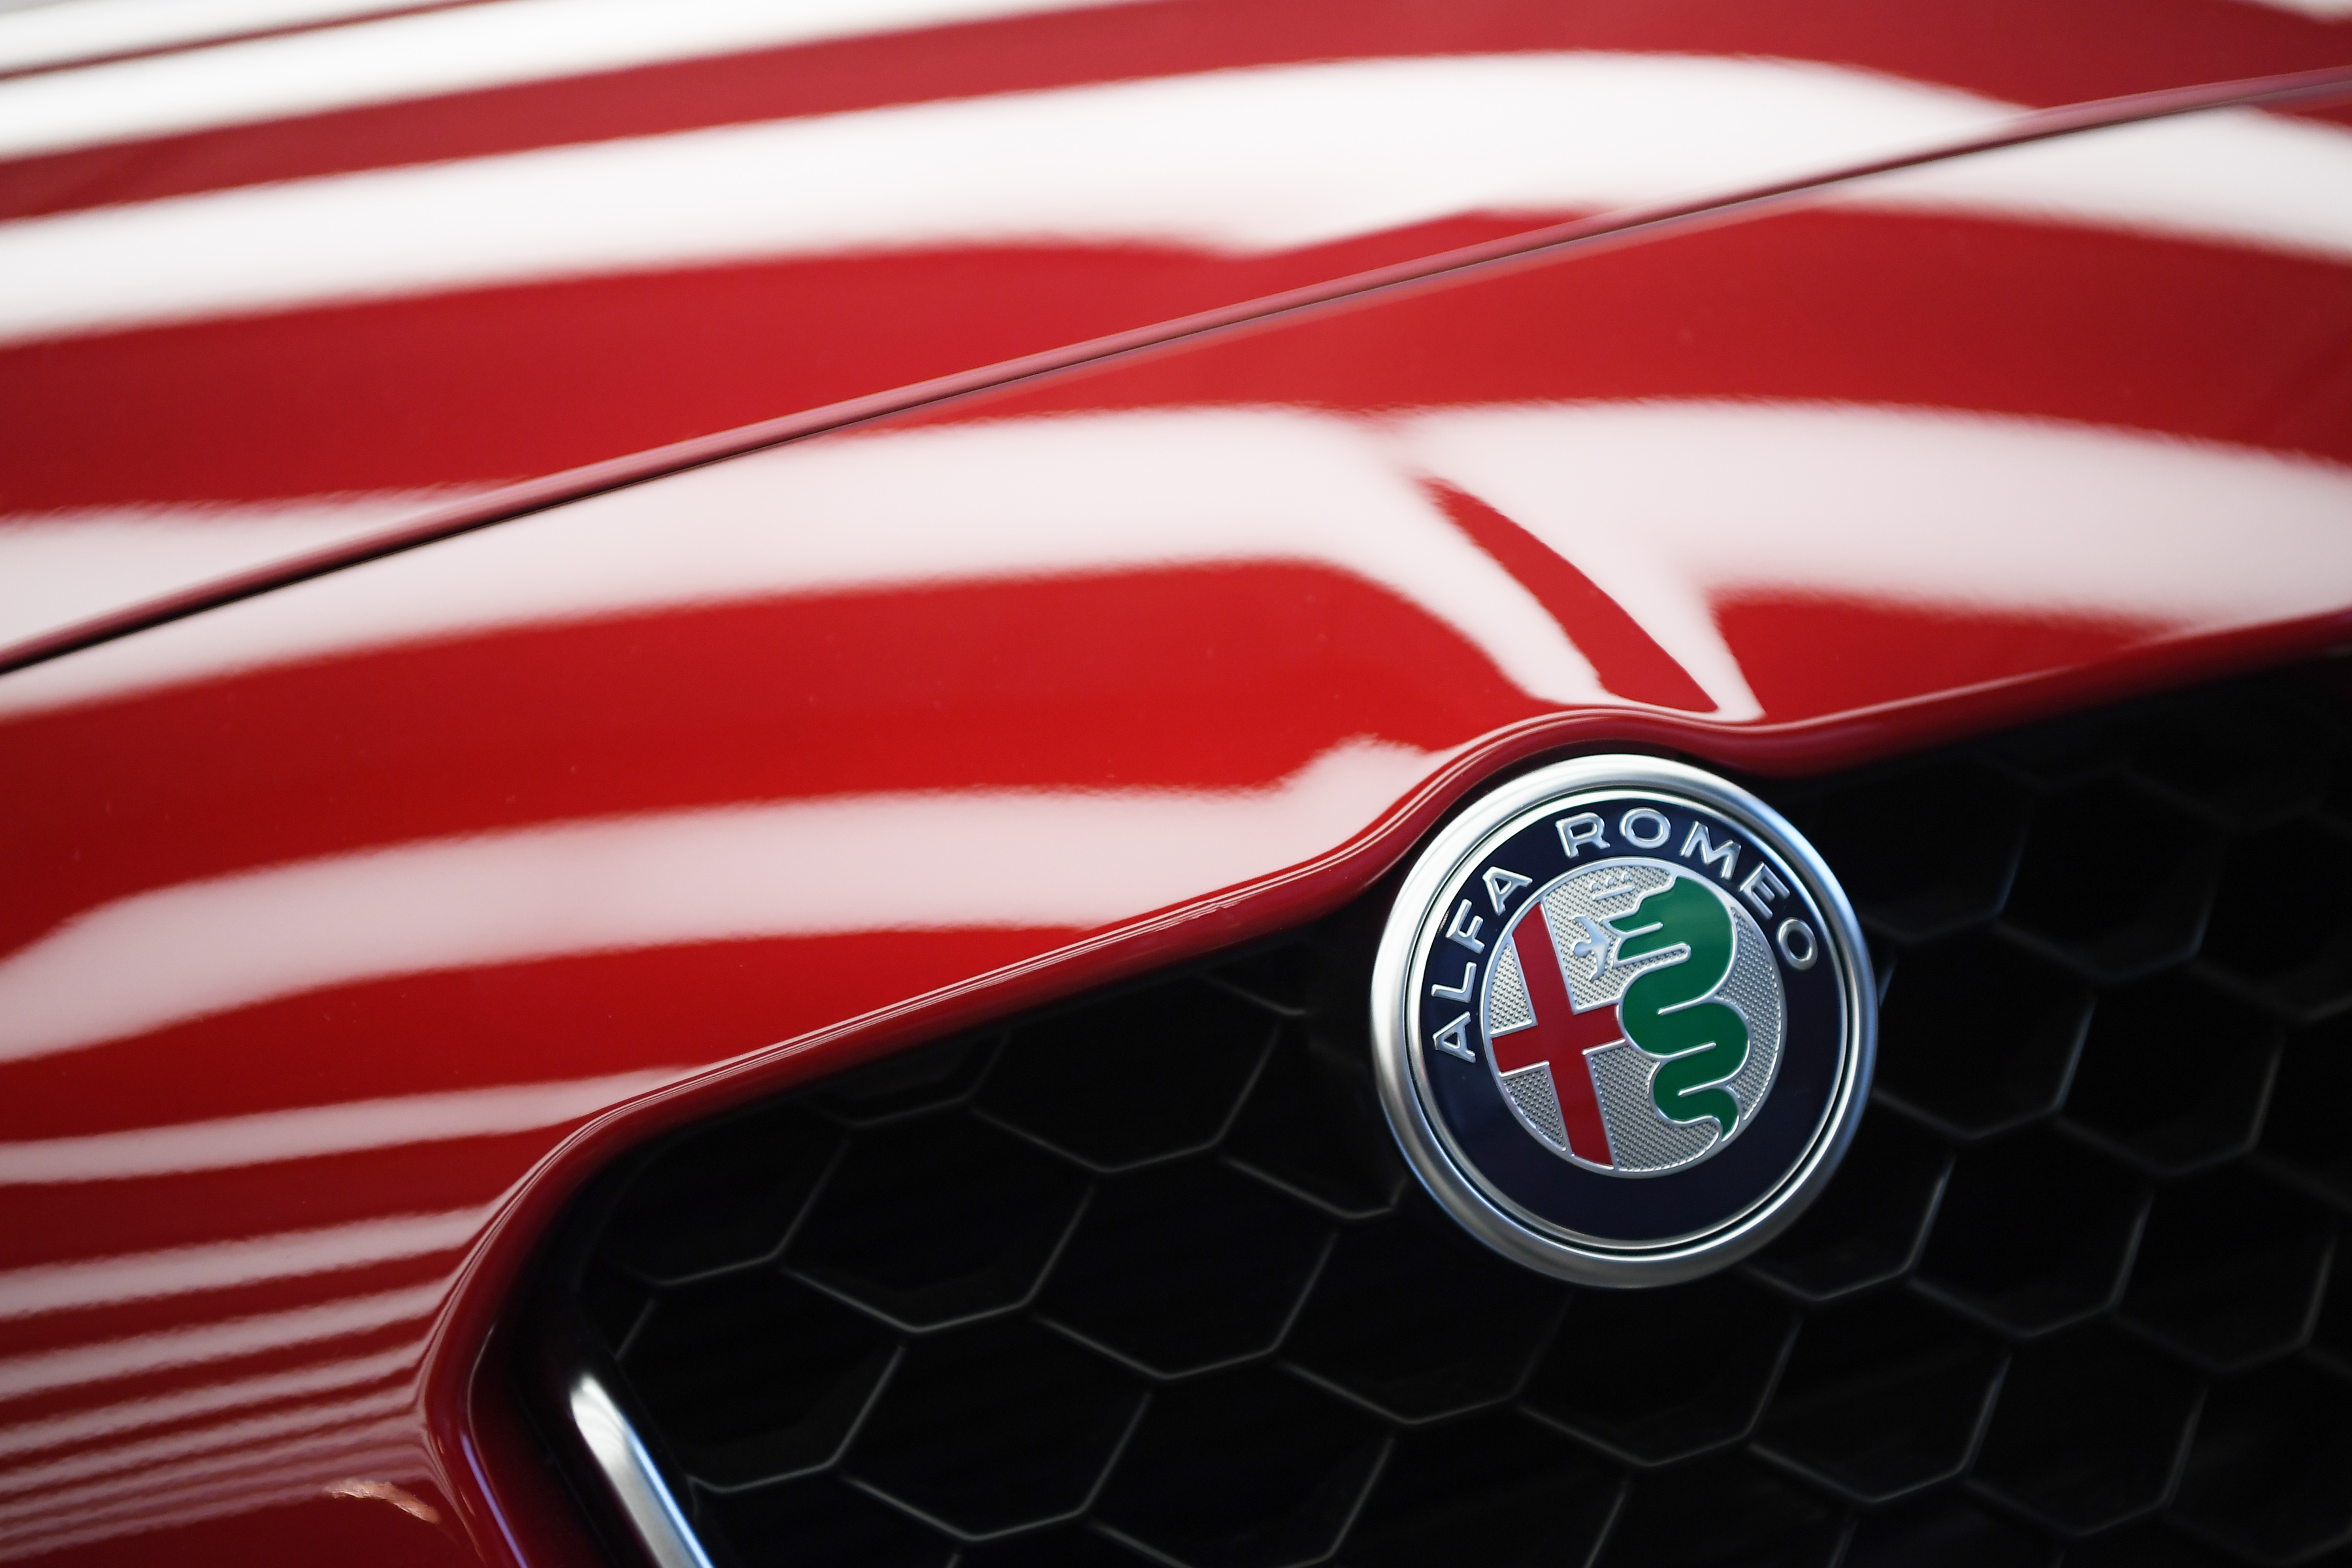 The Alfa Romeo logo on a red car.